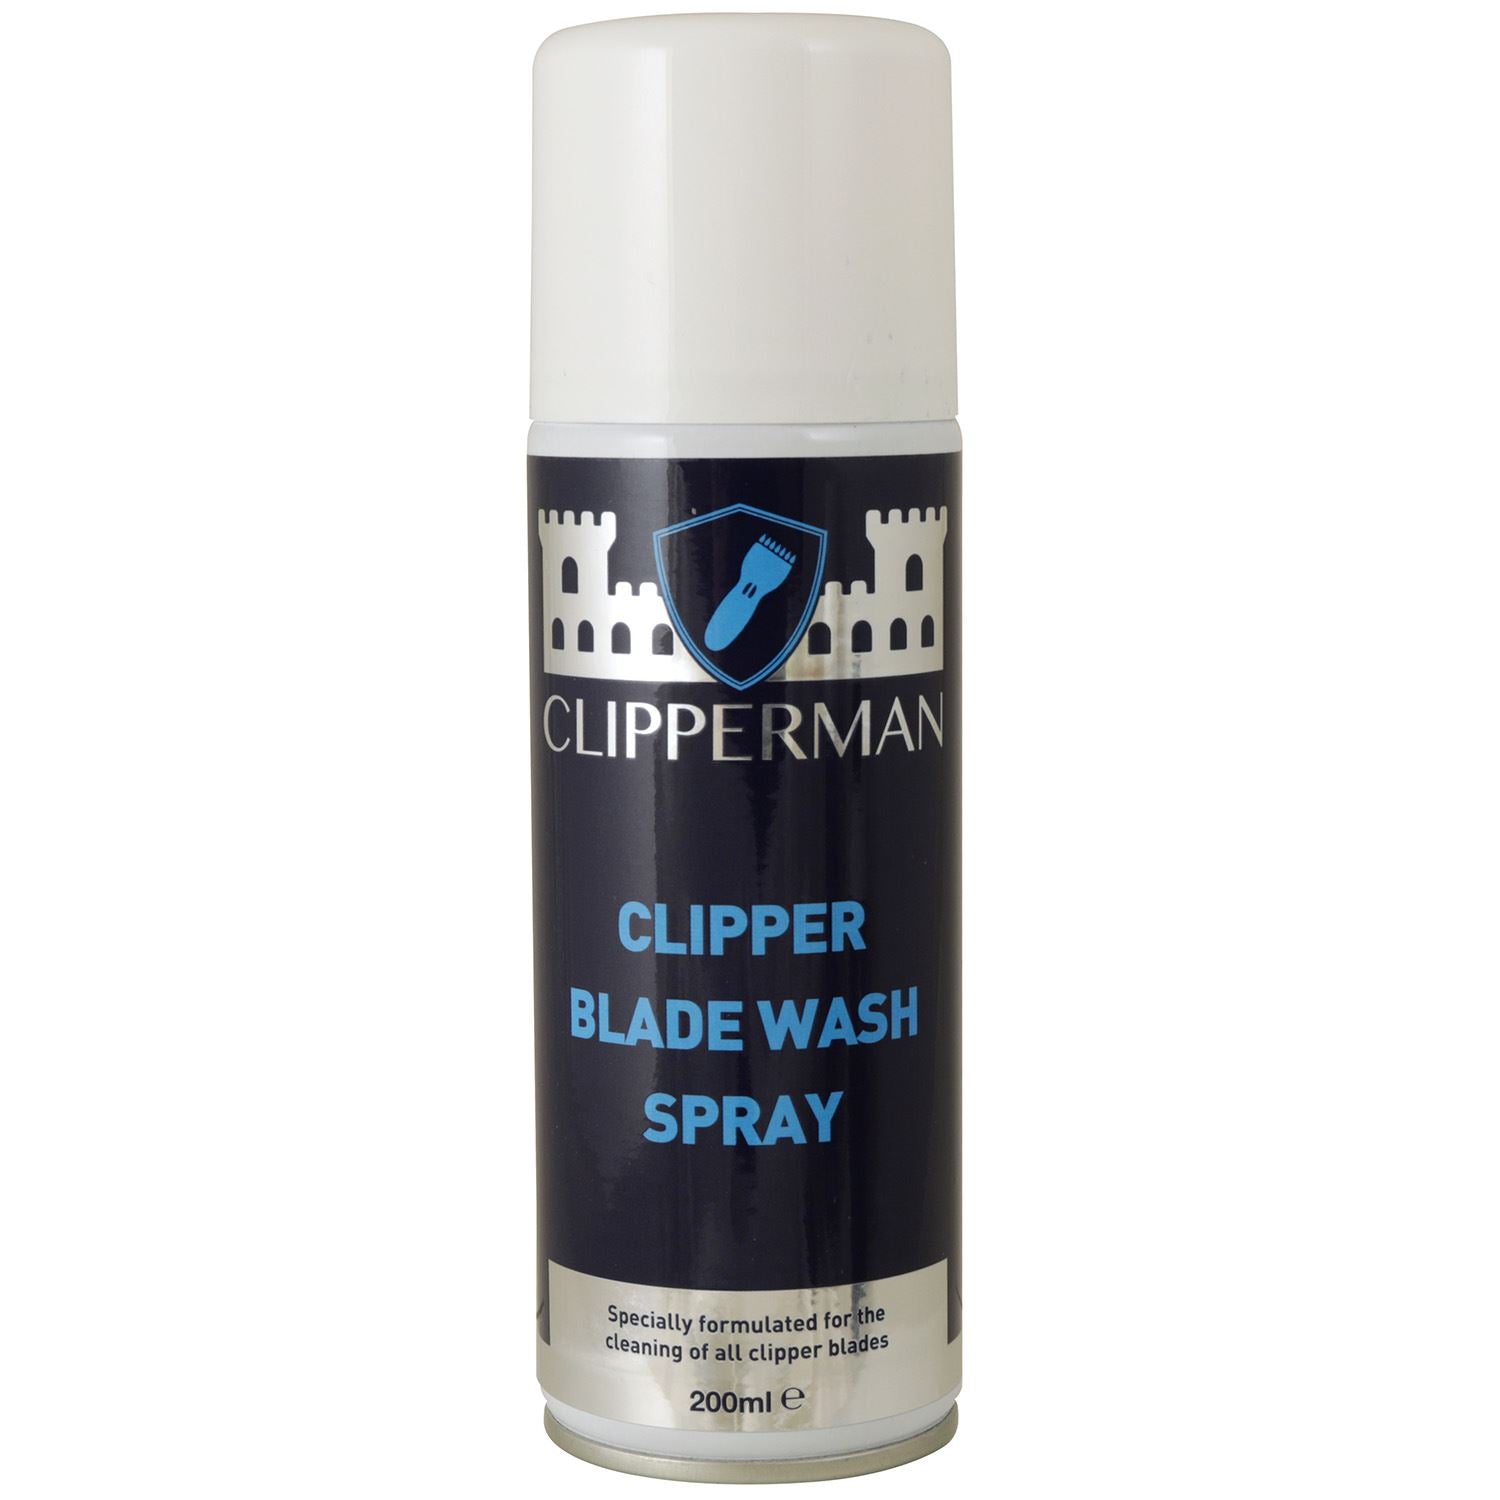 Clipperman Clipper Blade Wash Spray - Just Horse Riders